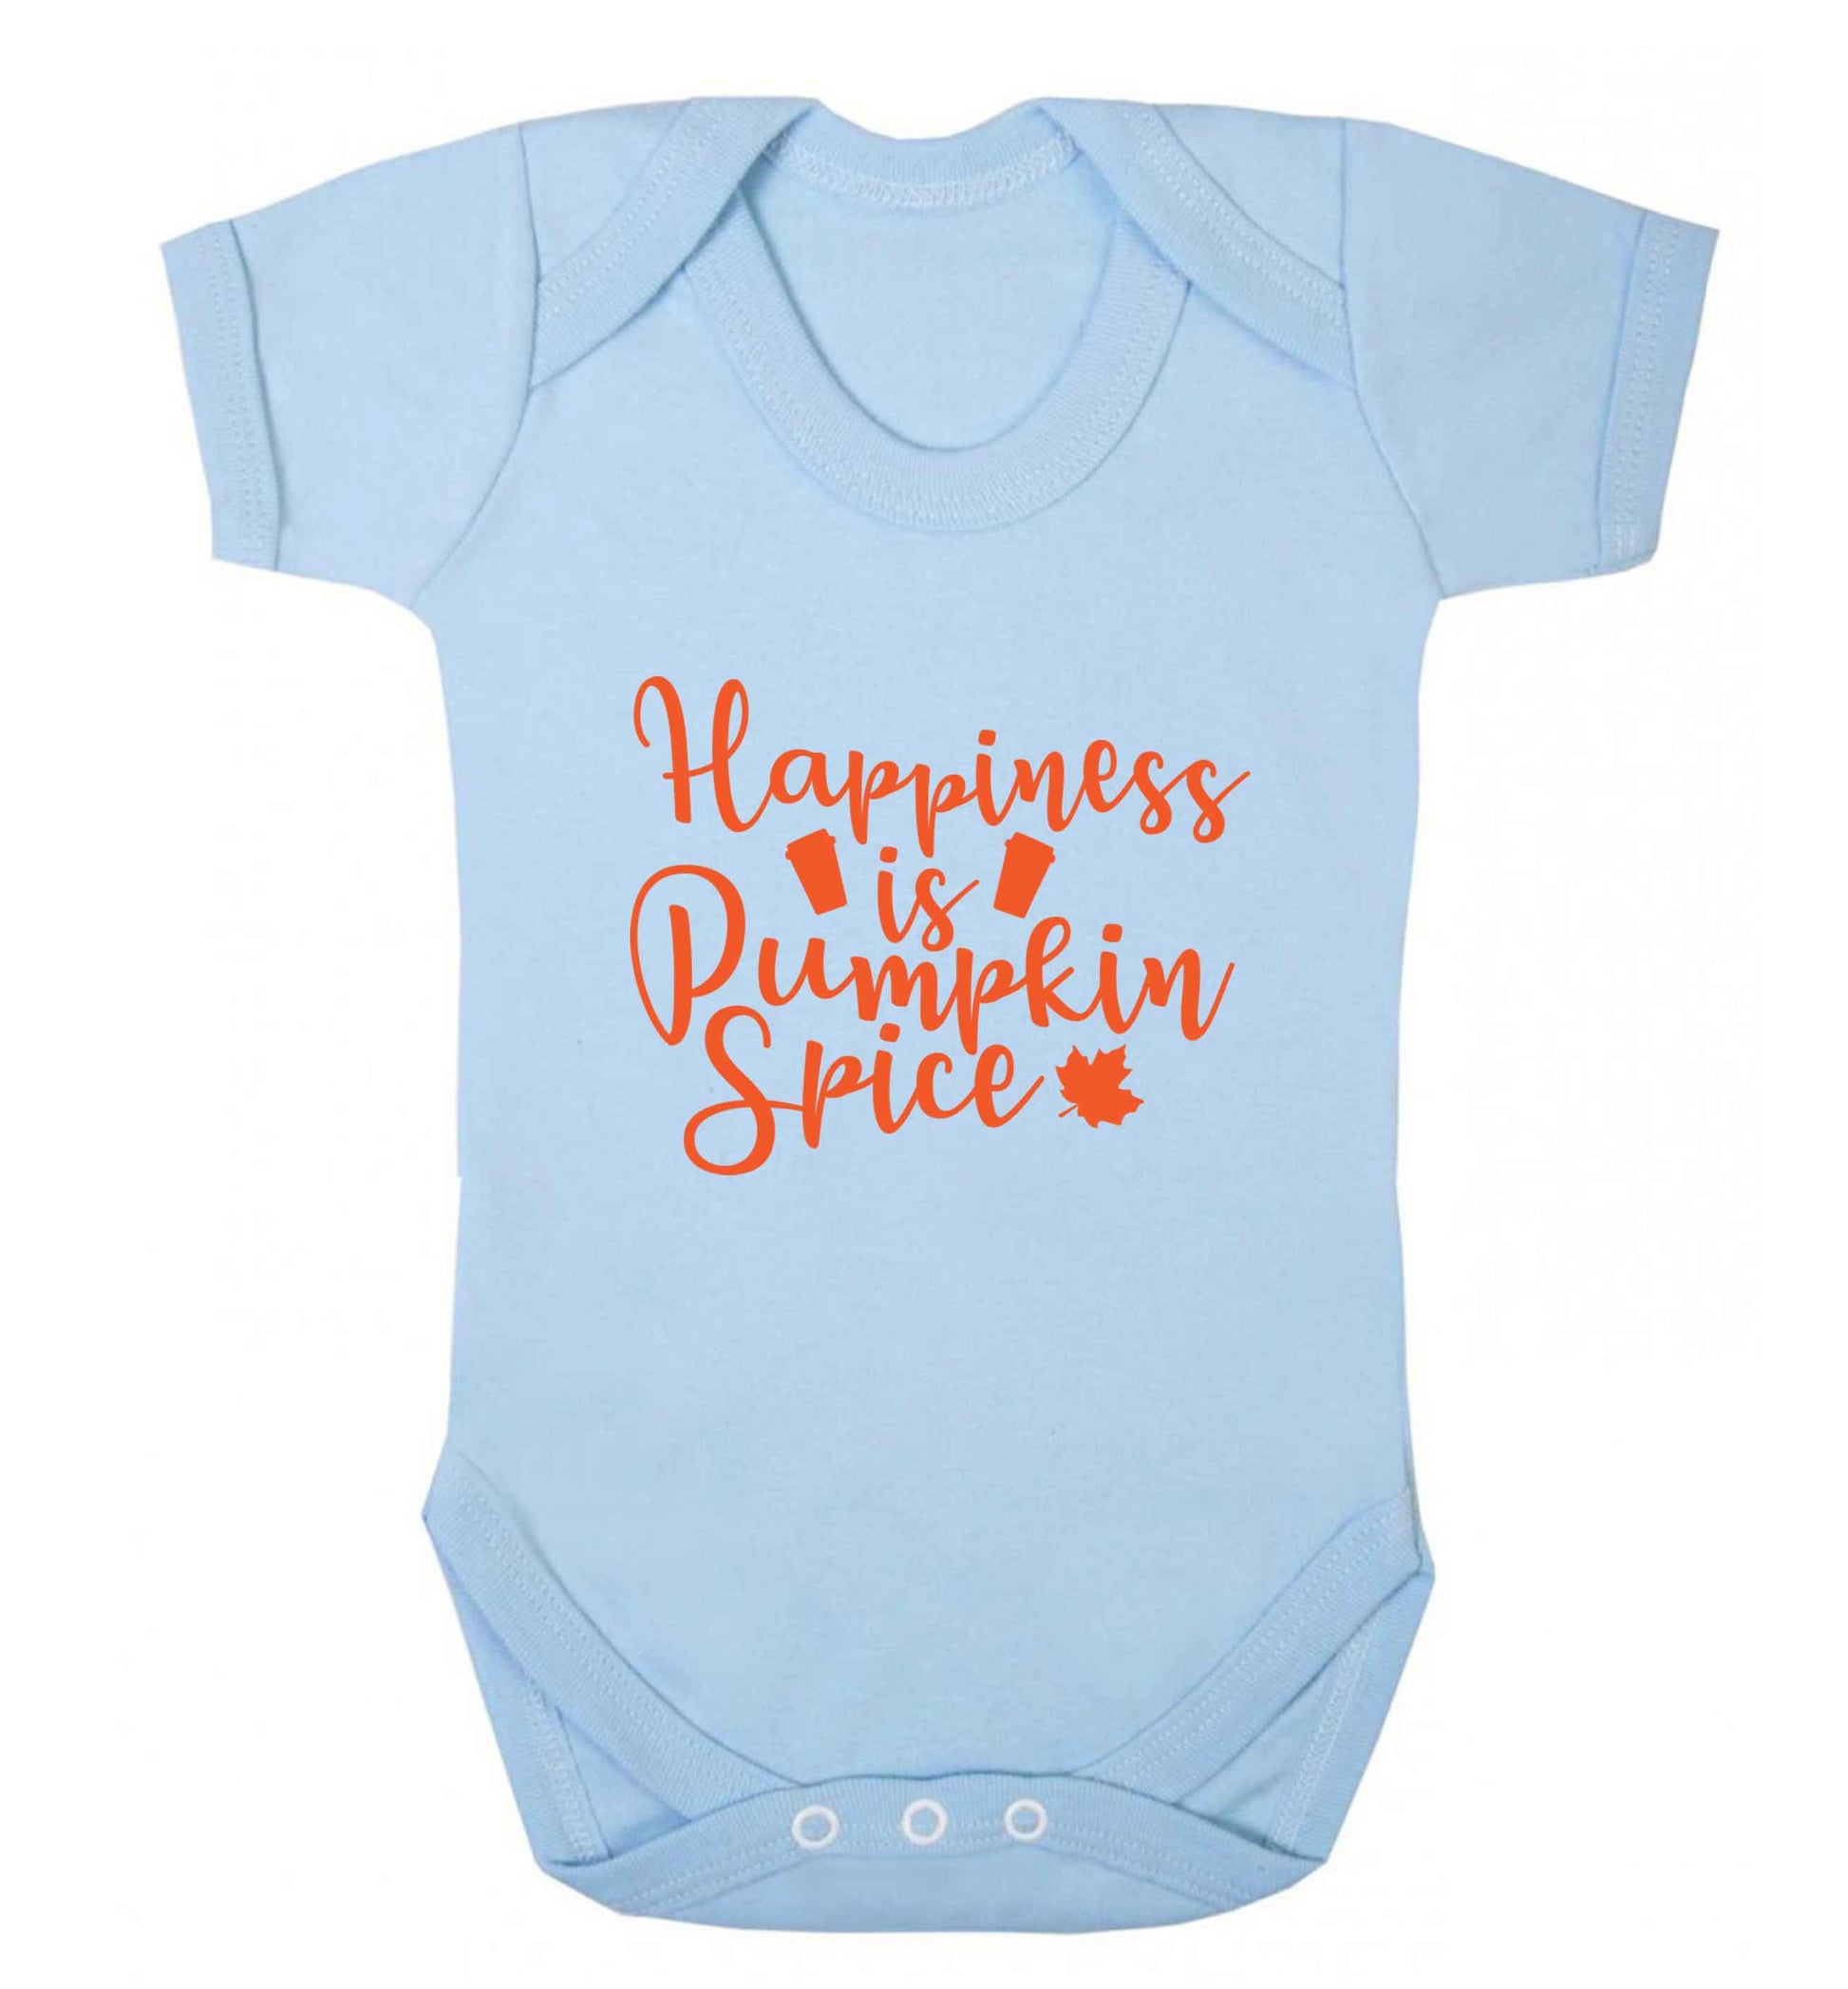 Happiness Pumpkin Spice baby vest pale blue 18-24 months